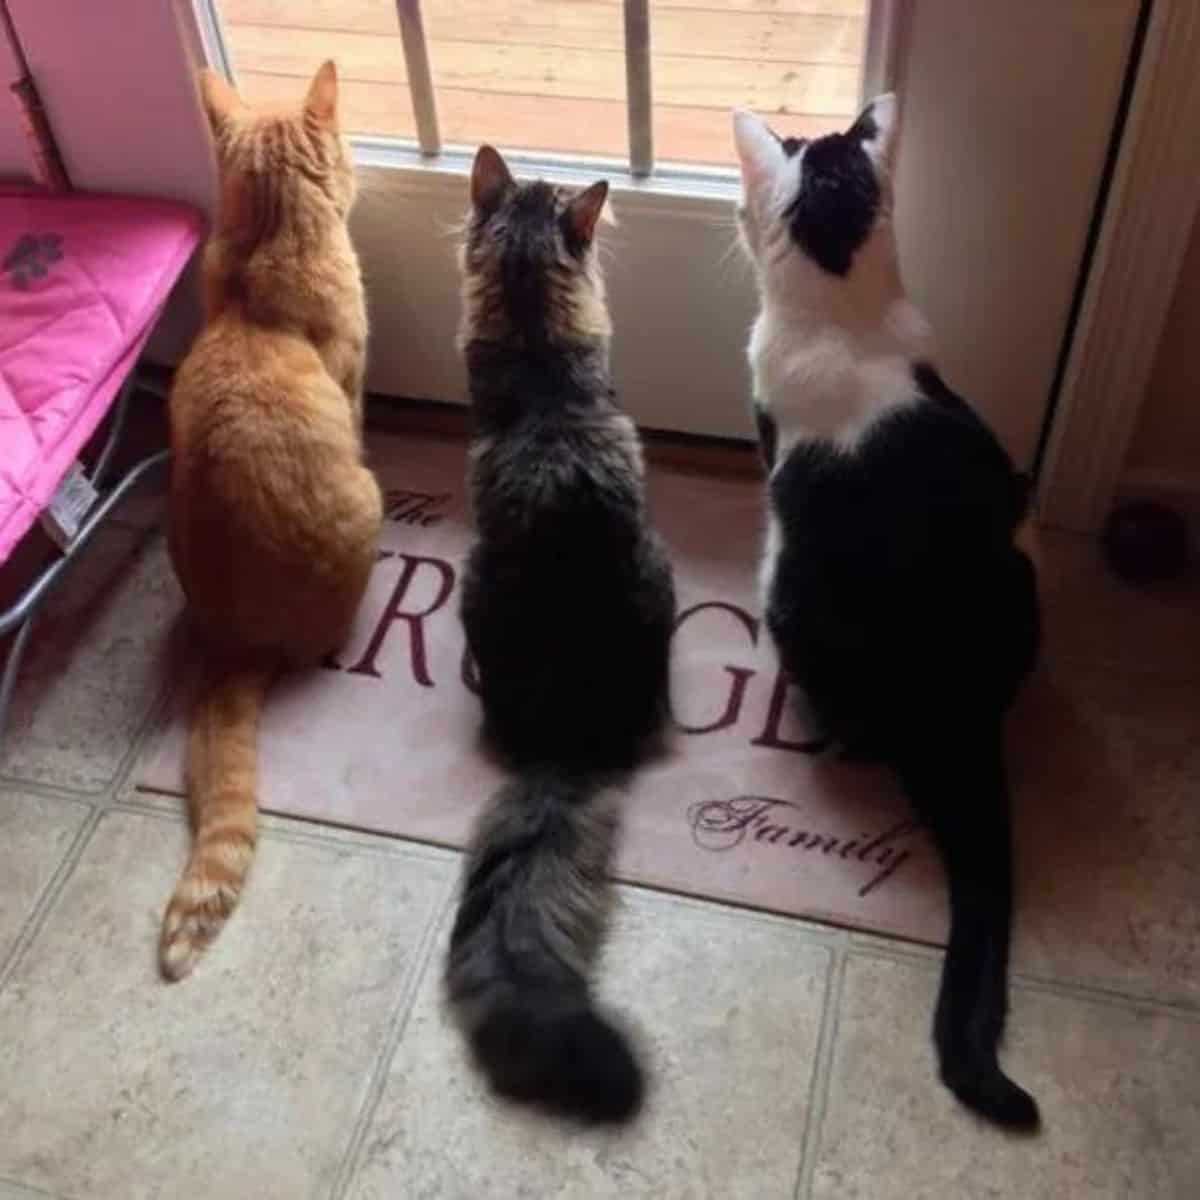 three cats looking through the door glass